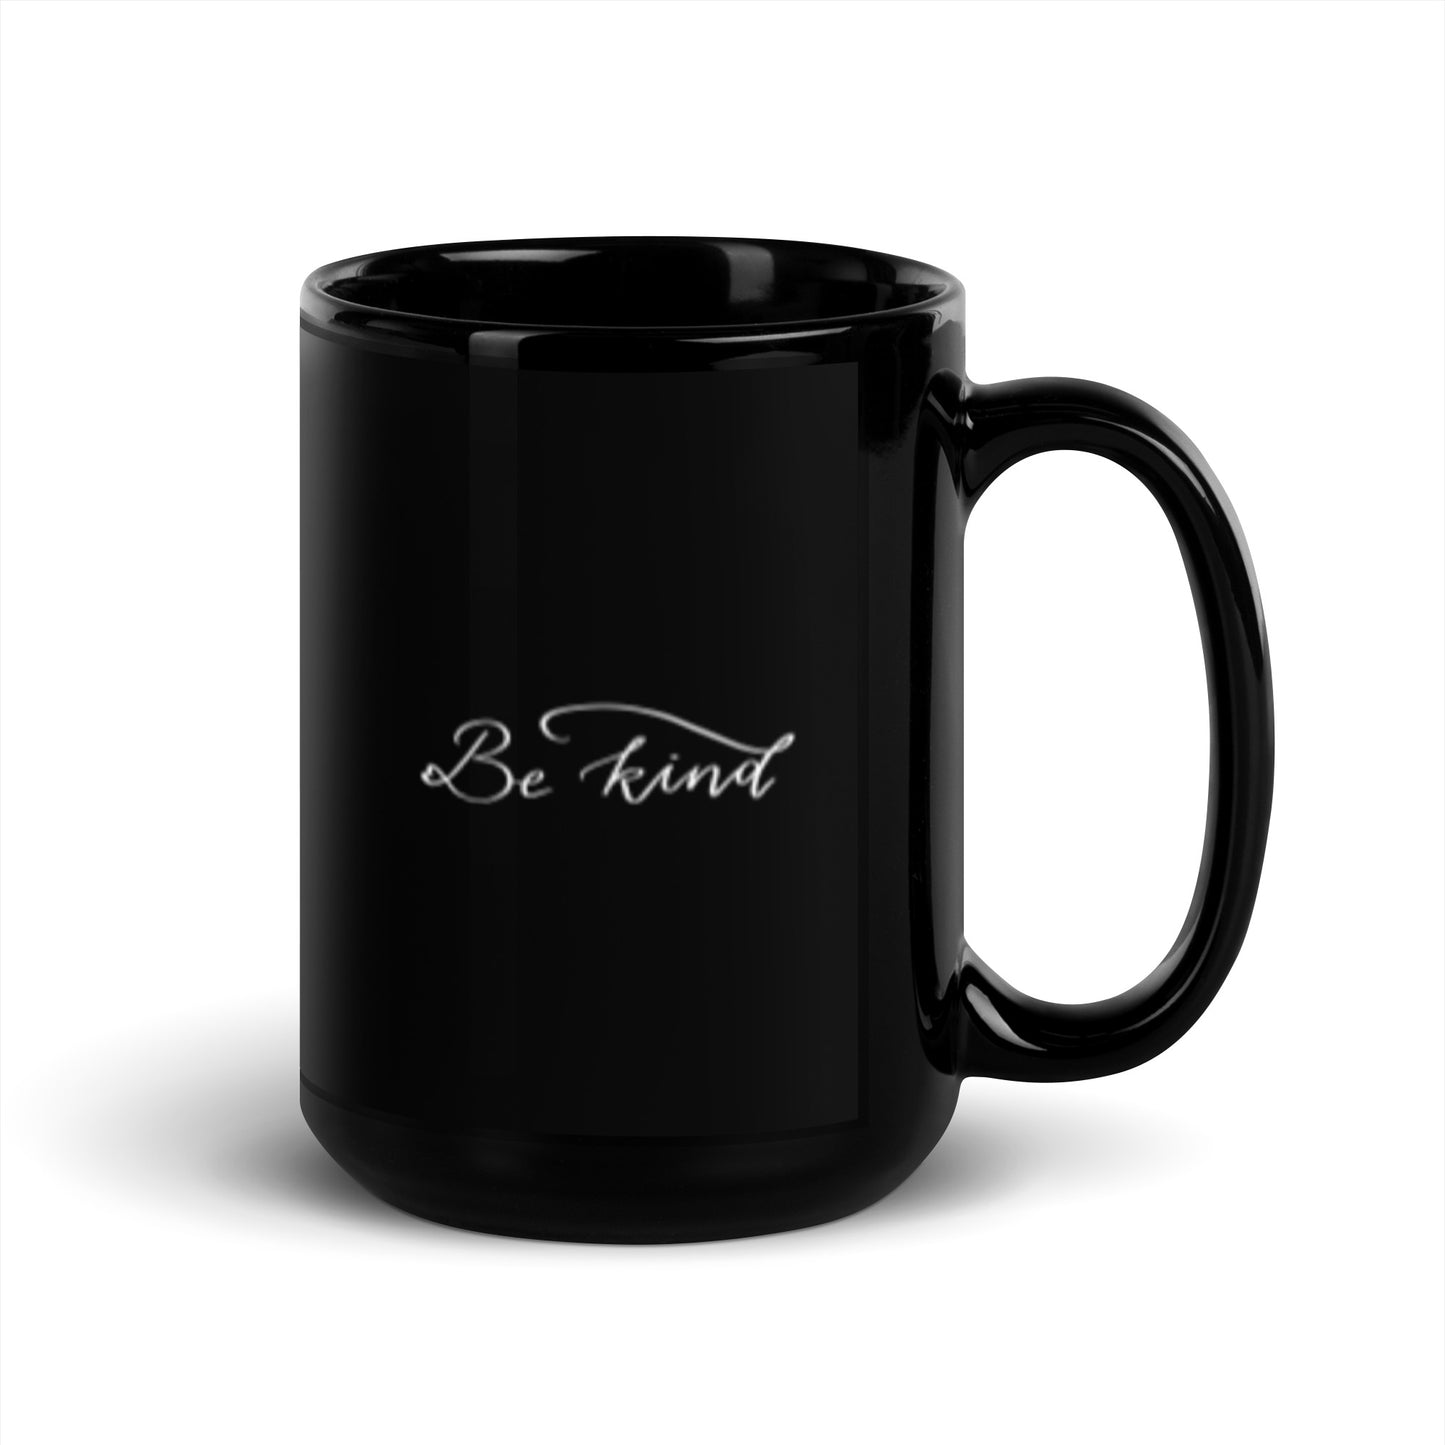 Ceramic mug "Be kind"